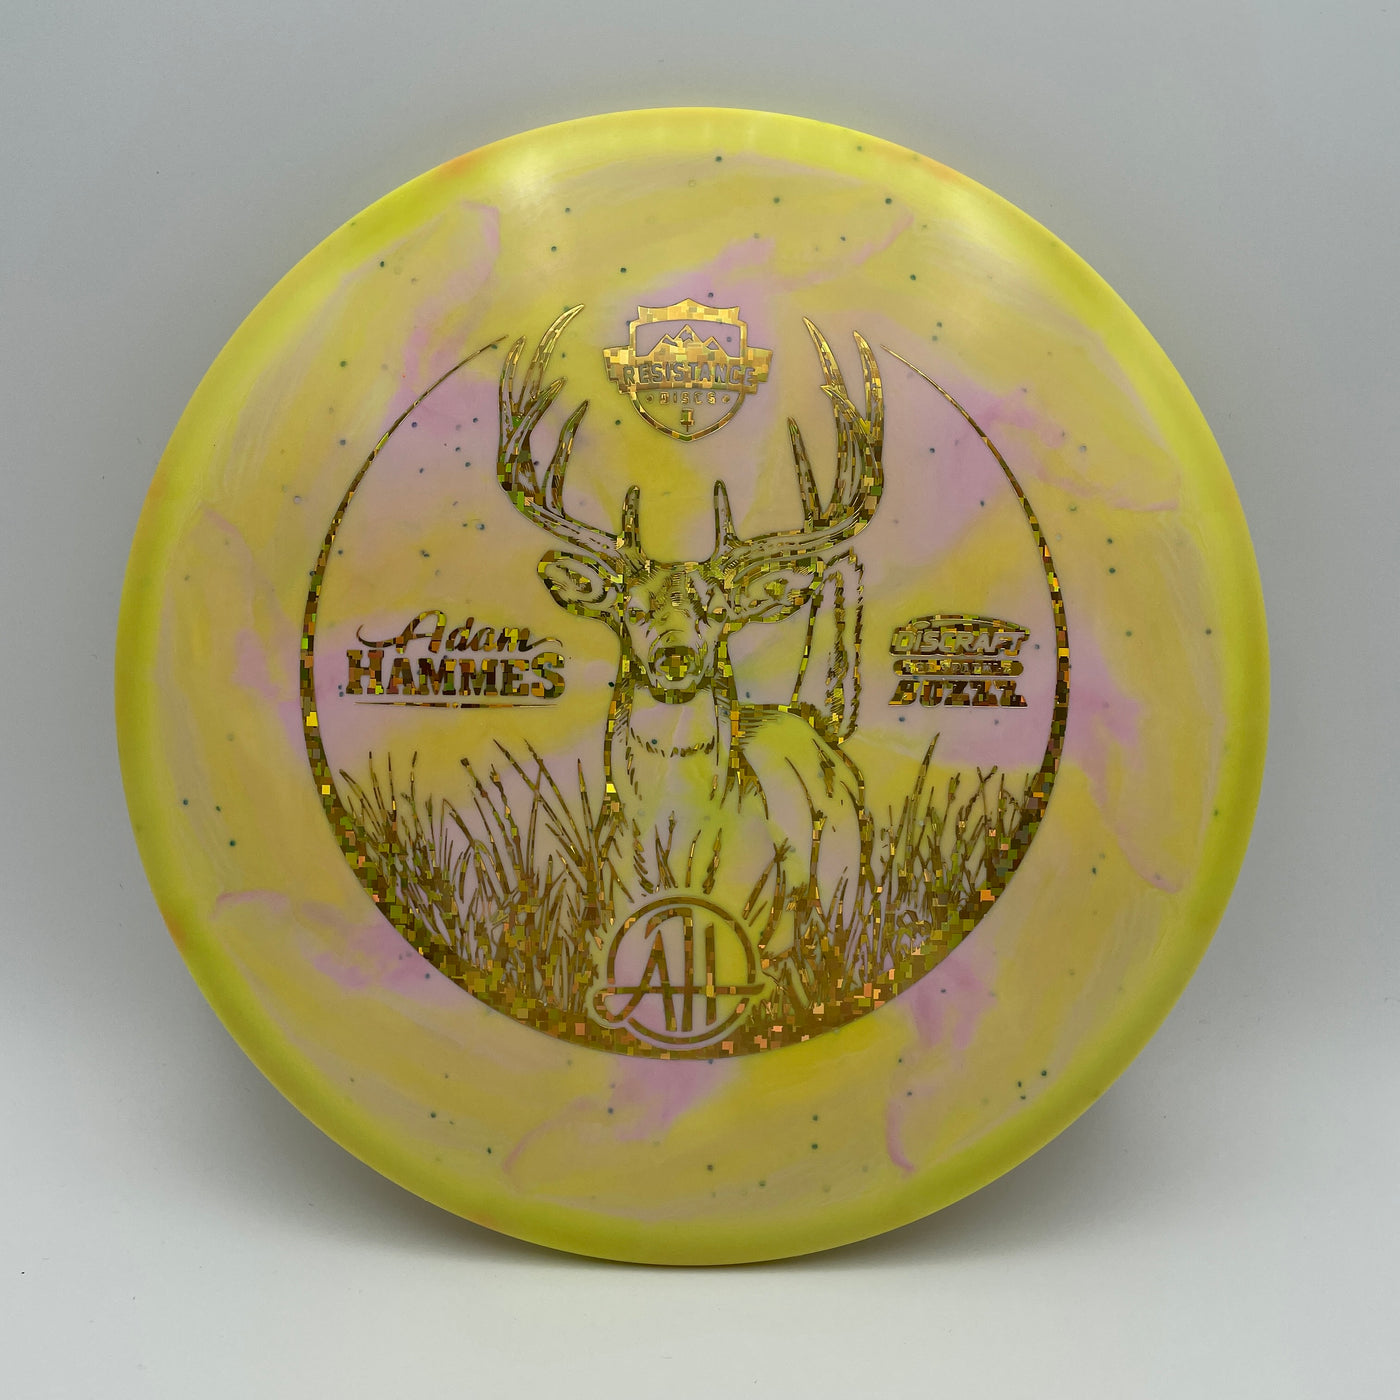 Adam Hammes ESP Sparkle Buzzz - 177g+ Gold Confetti